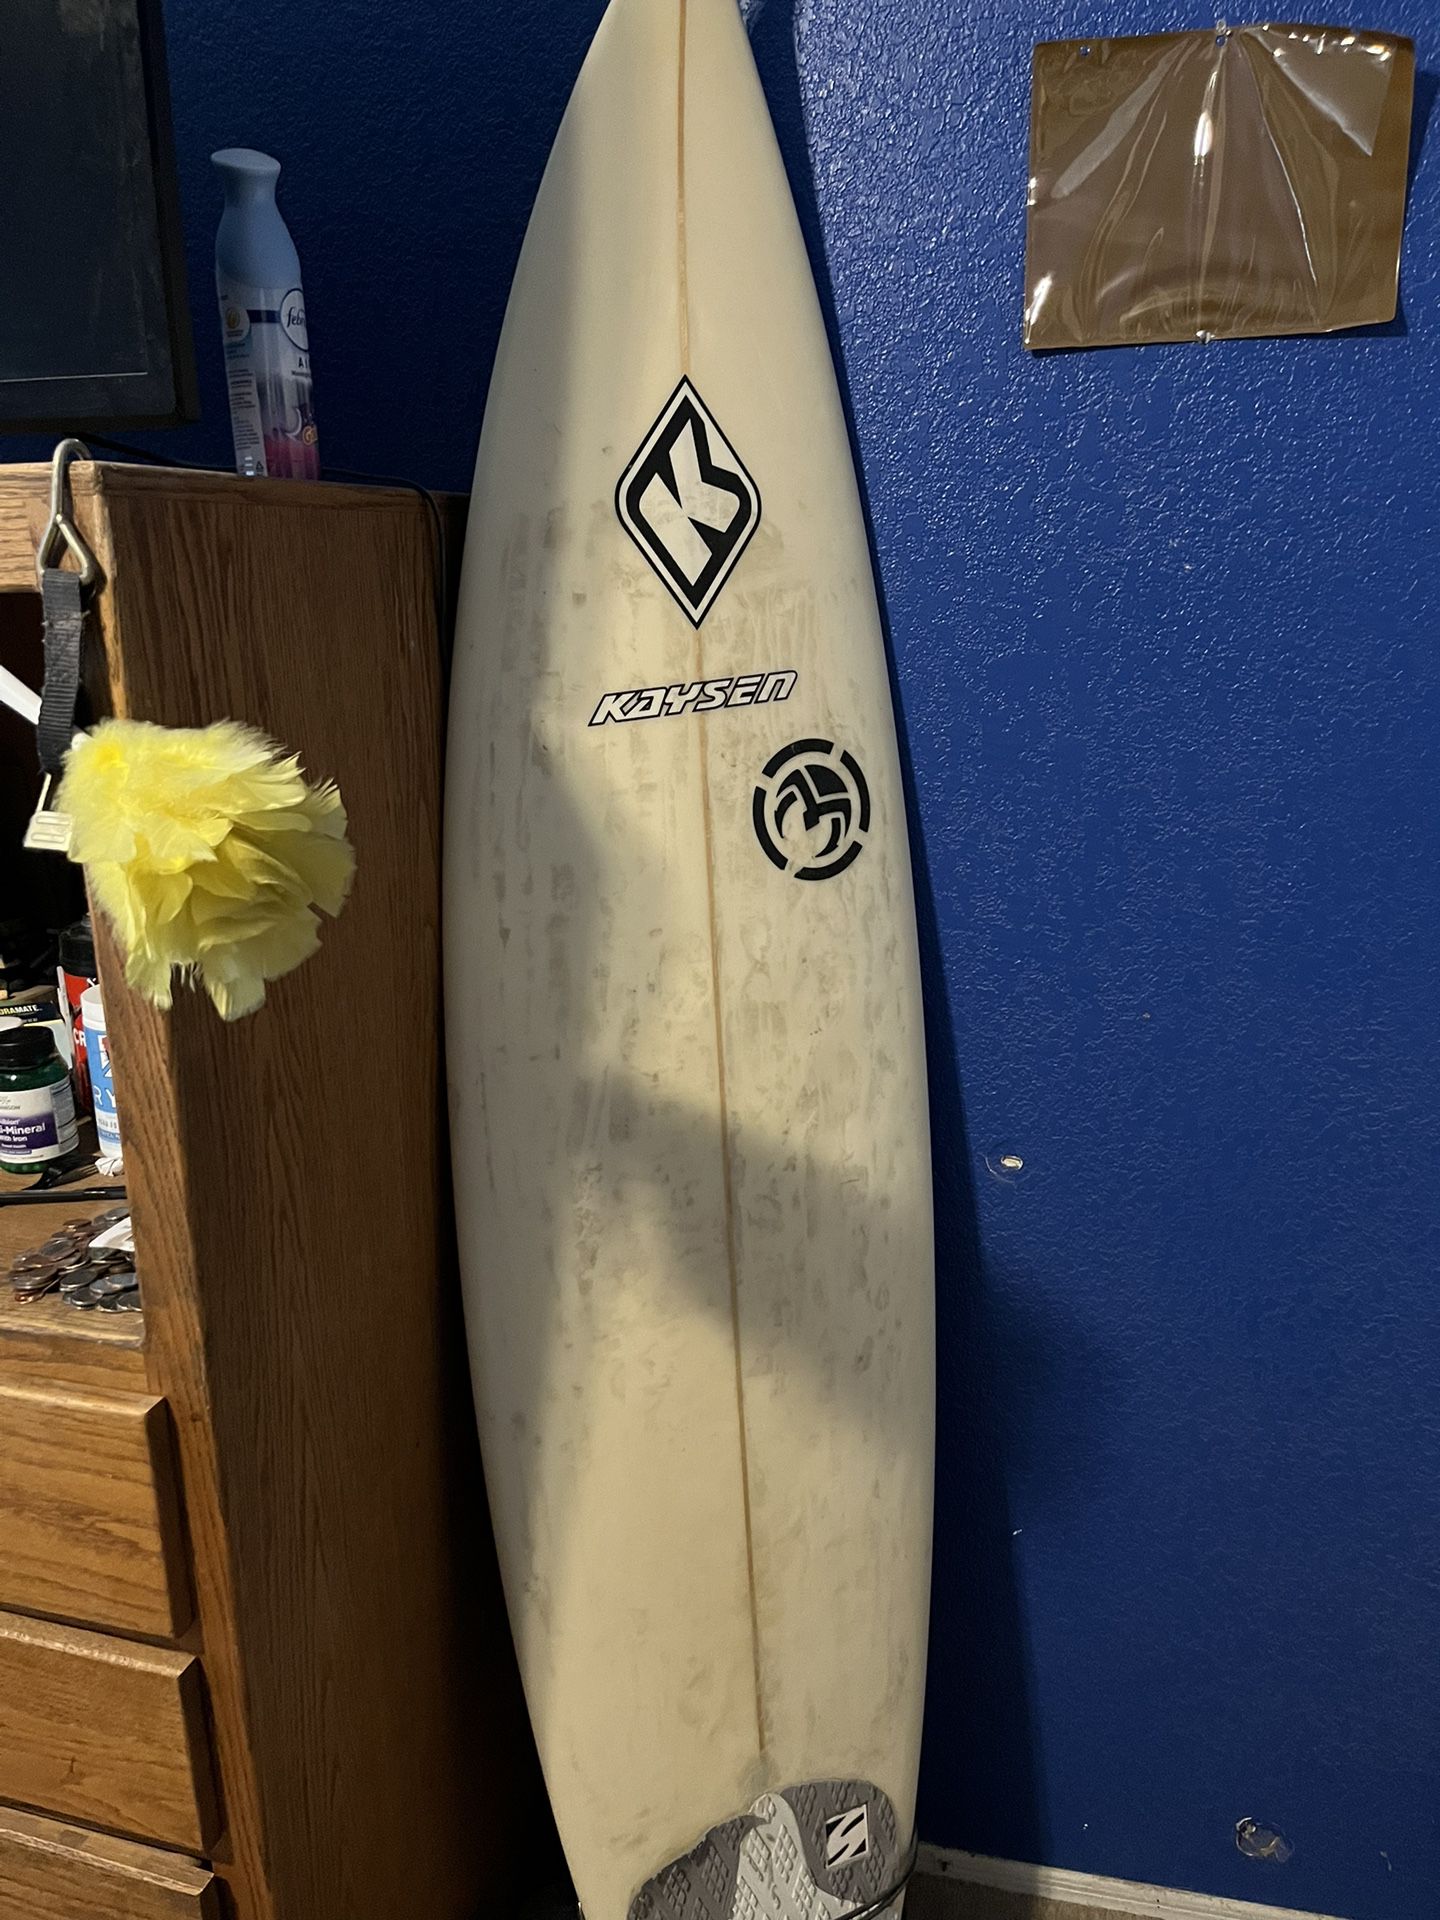 Kaysen Surfboard For San Diego Trips!